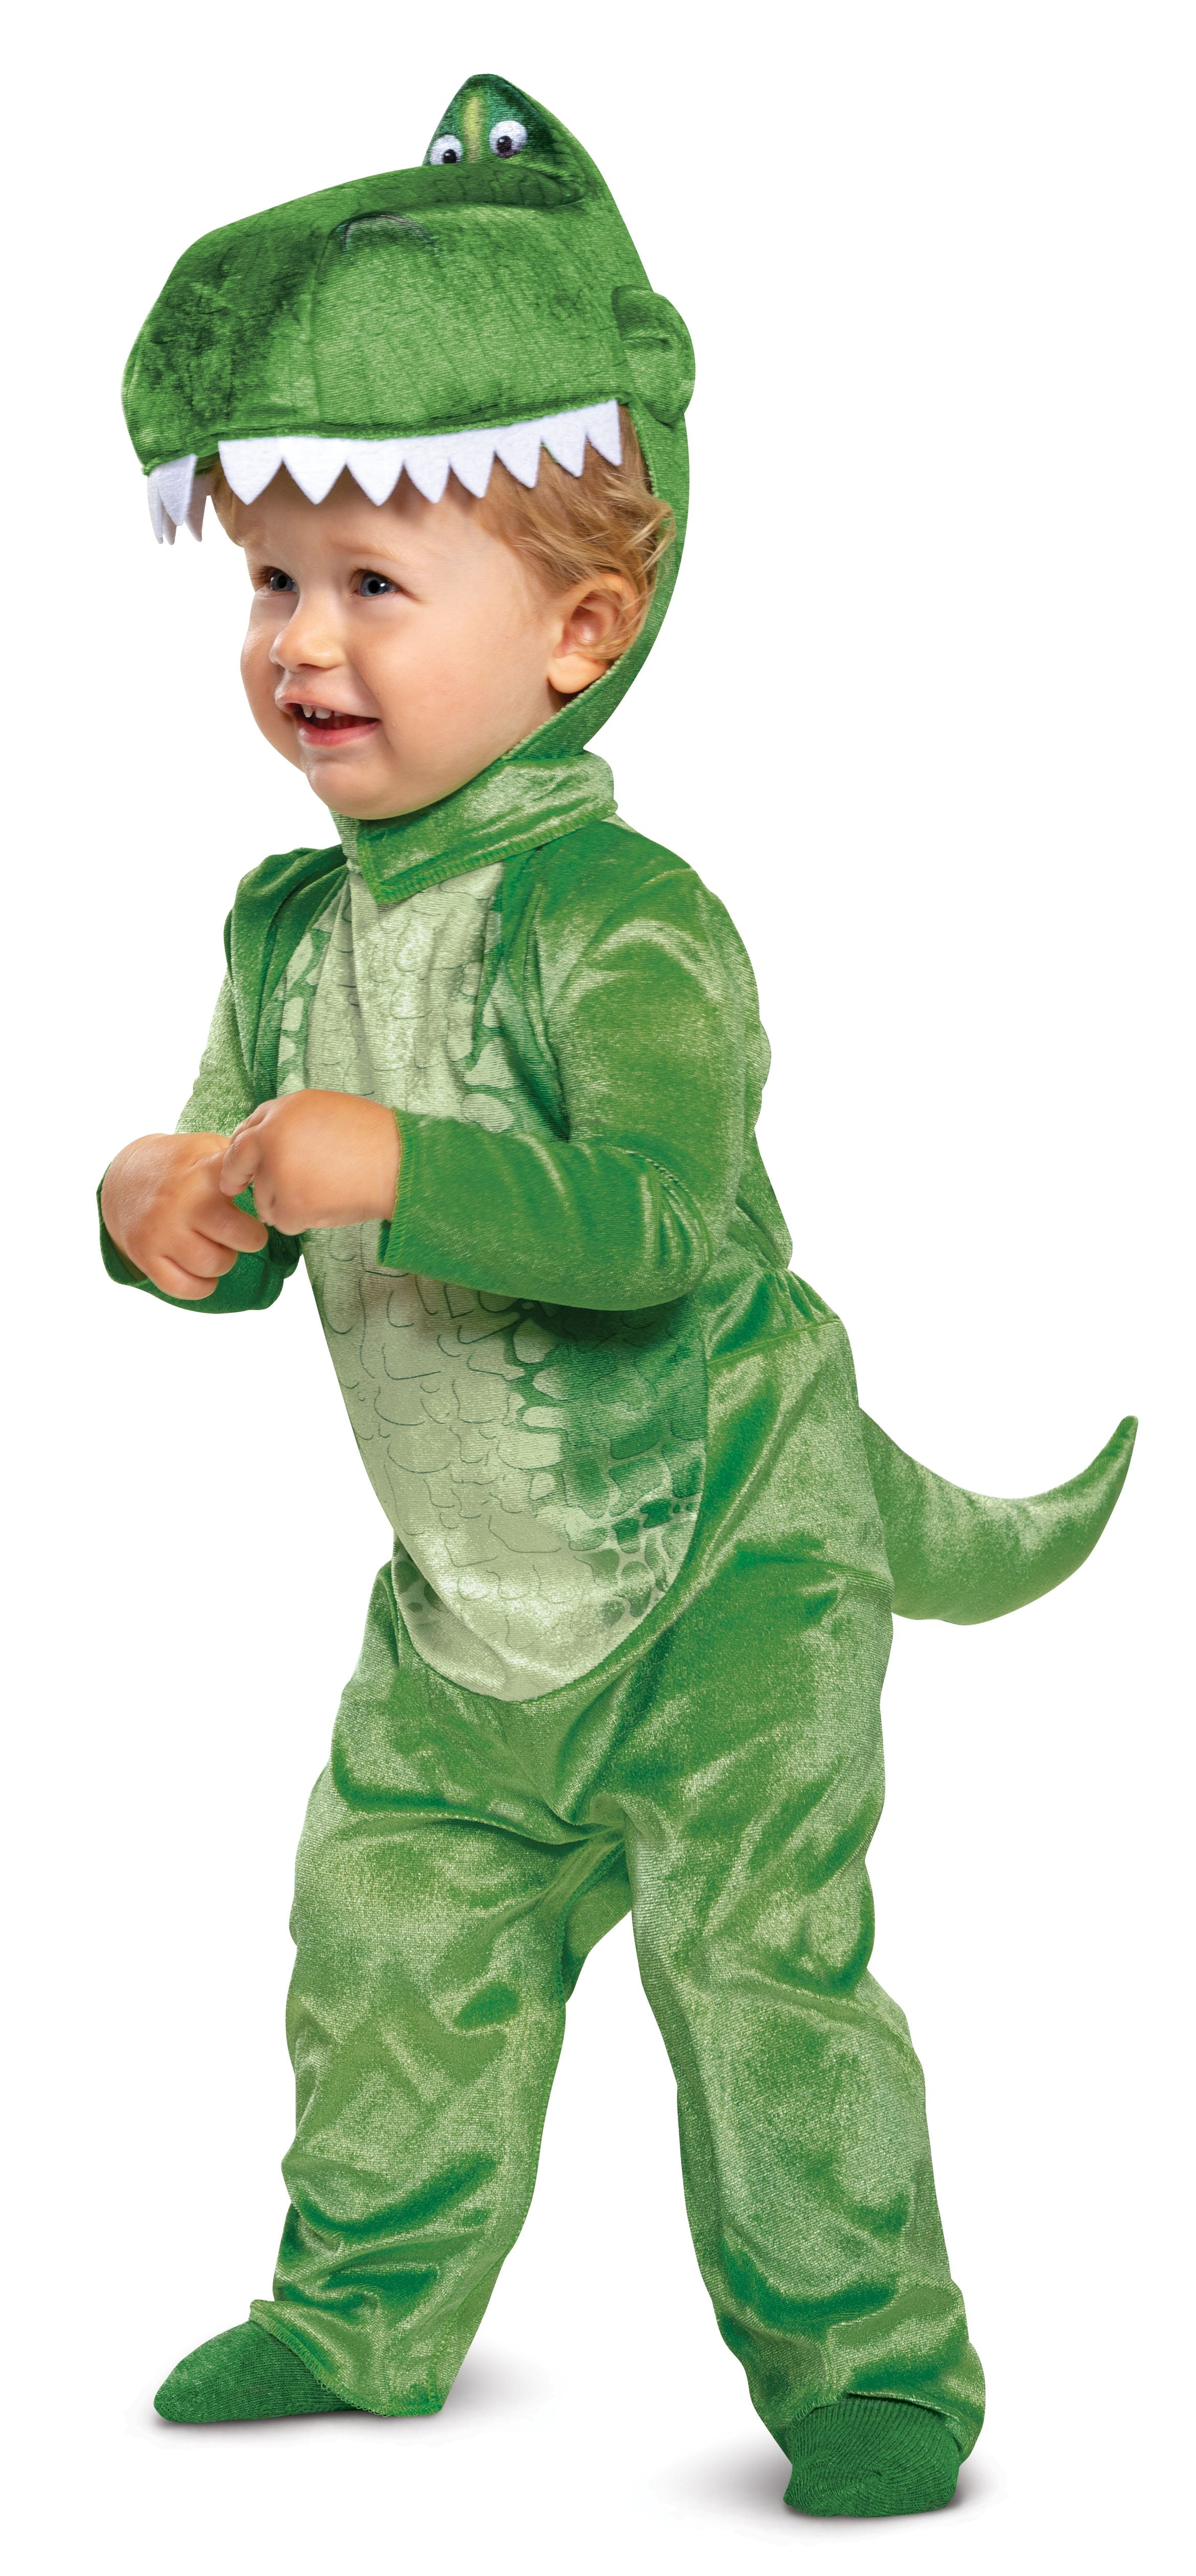 Details about   Rex Toy Story 4 Disney Pixar Dinosaur Fancy Dress Halloween Baby Child Costume 